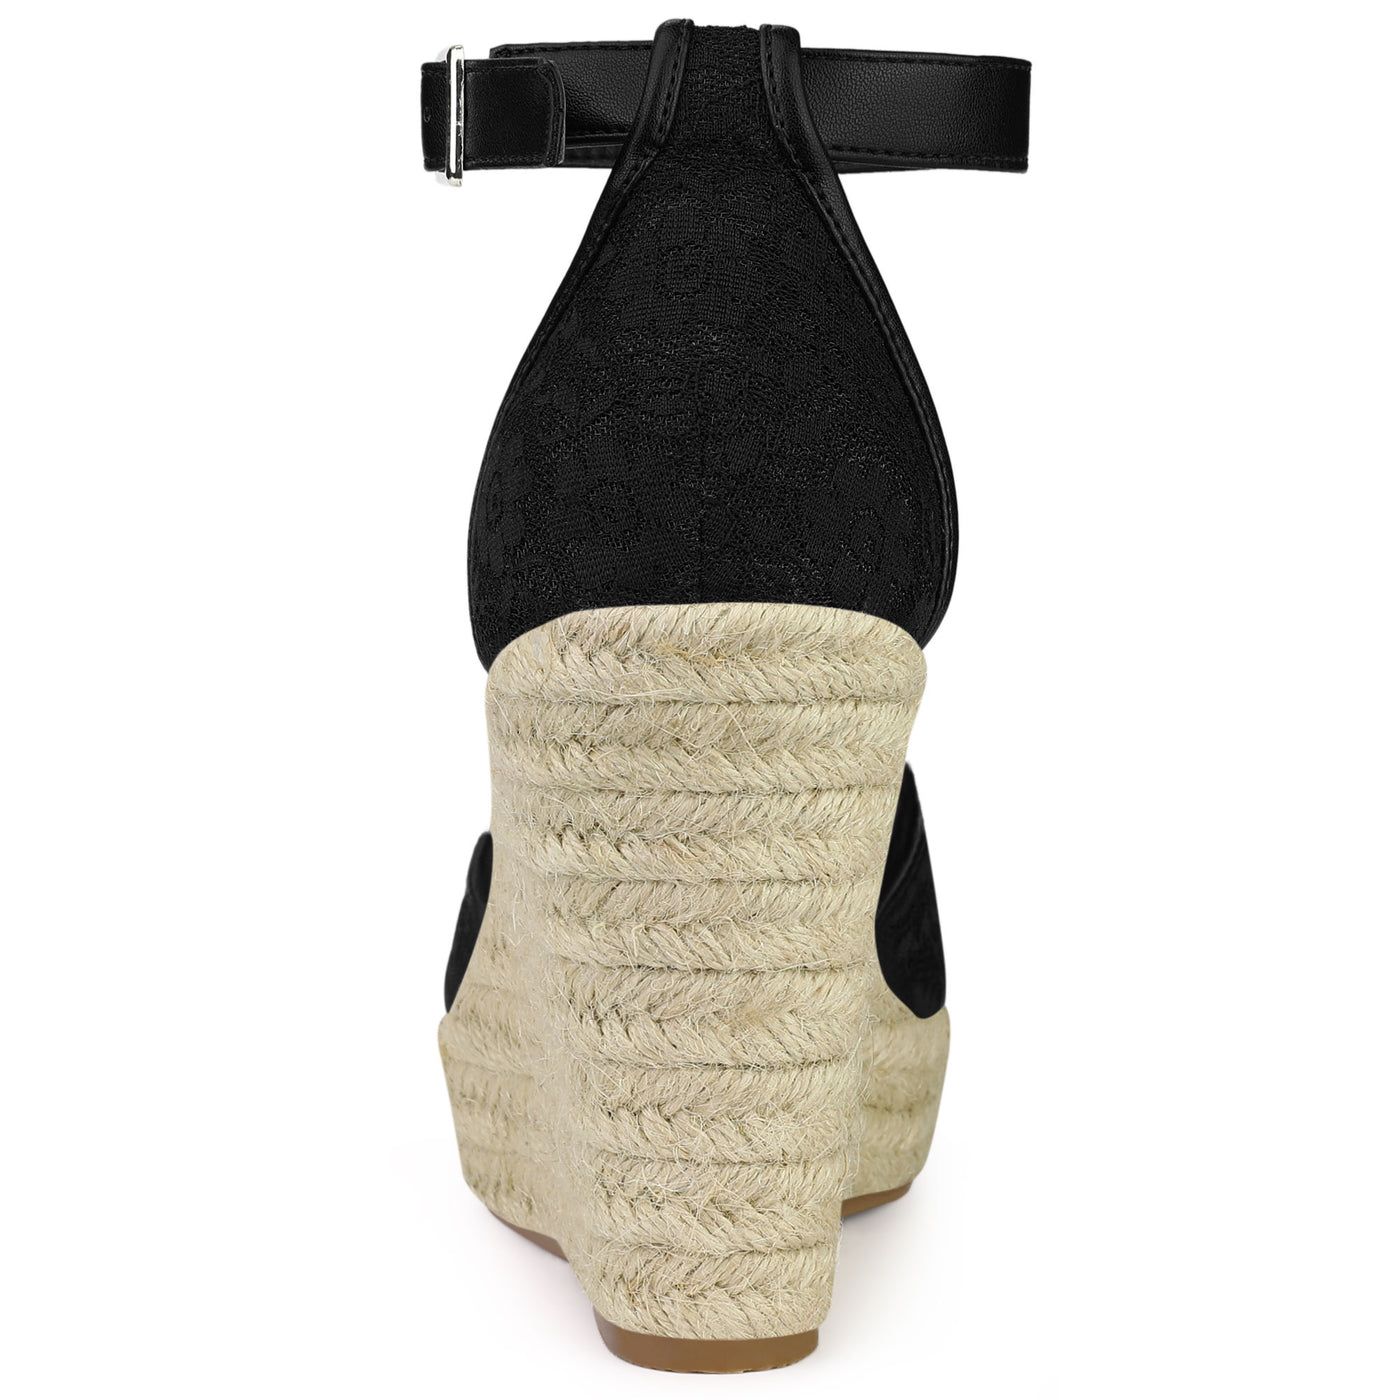 Allegra K Lace Platform Espadrilles Wedge Heel Sandals